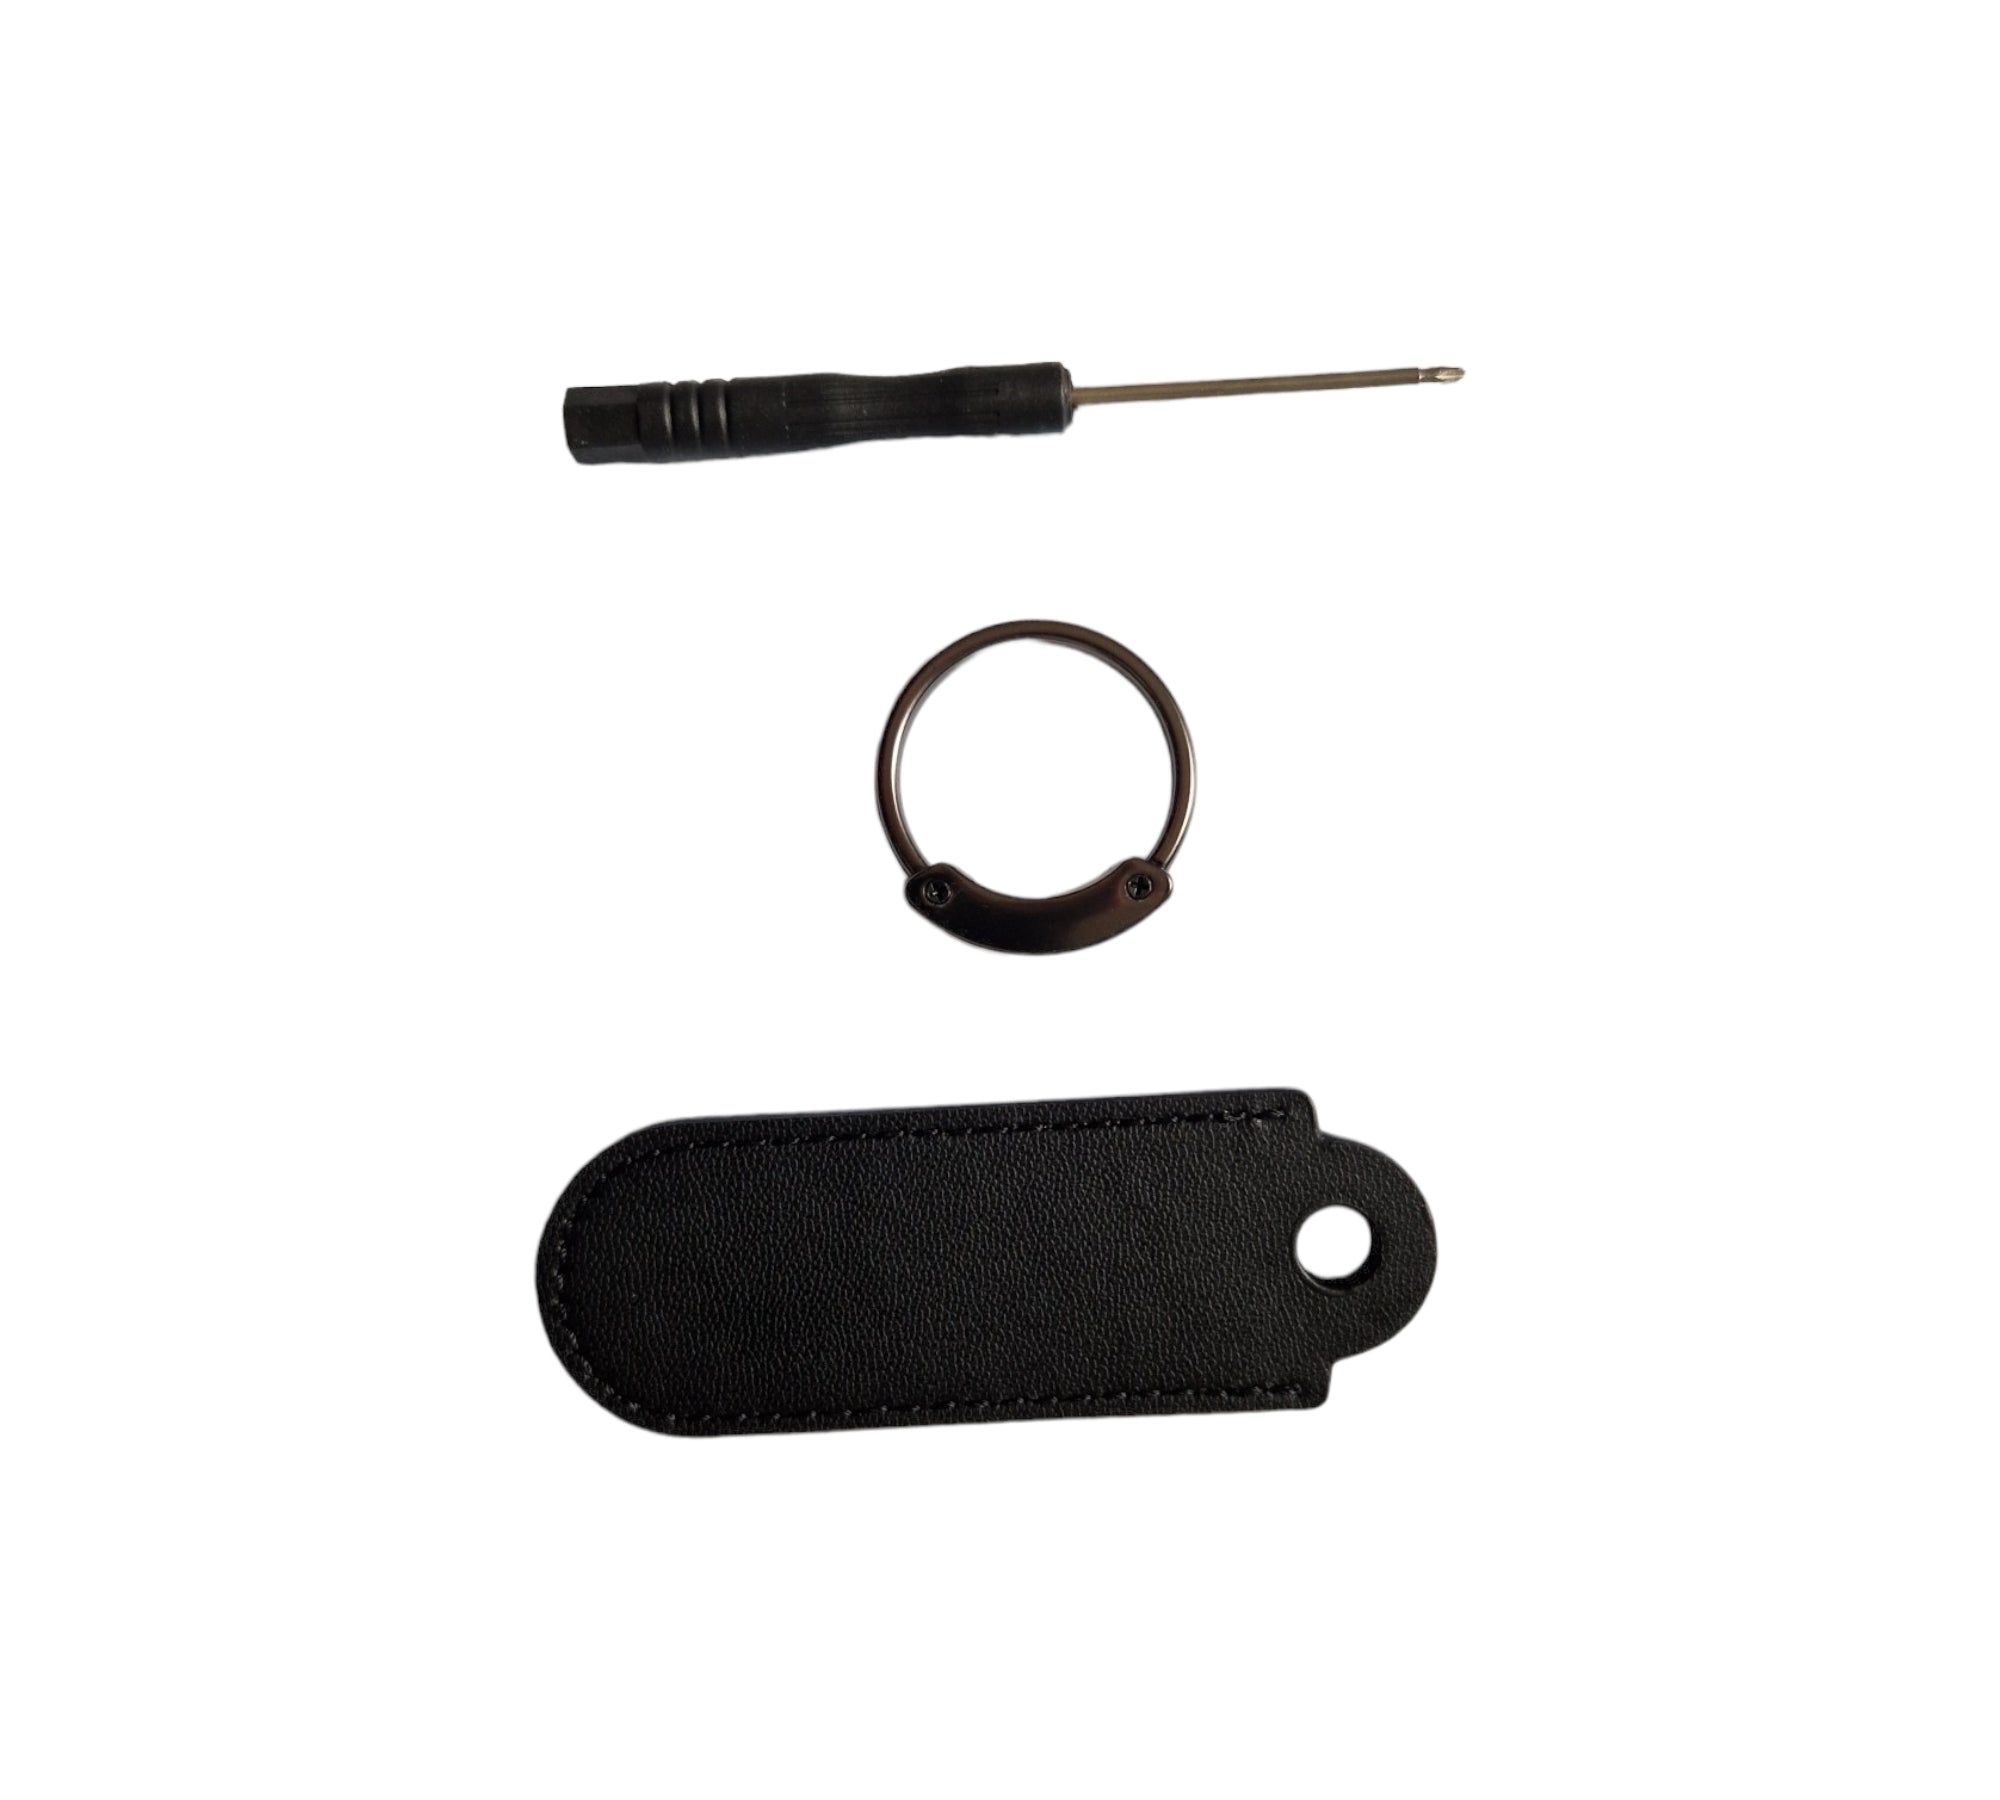 VW Black Carbon Fibre/Leather Key Ring - Accessories